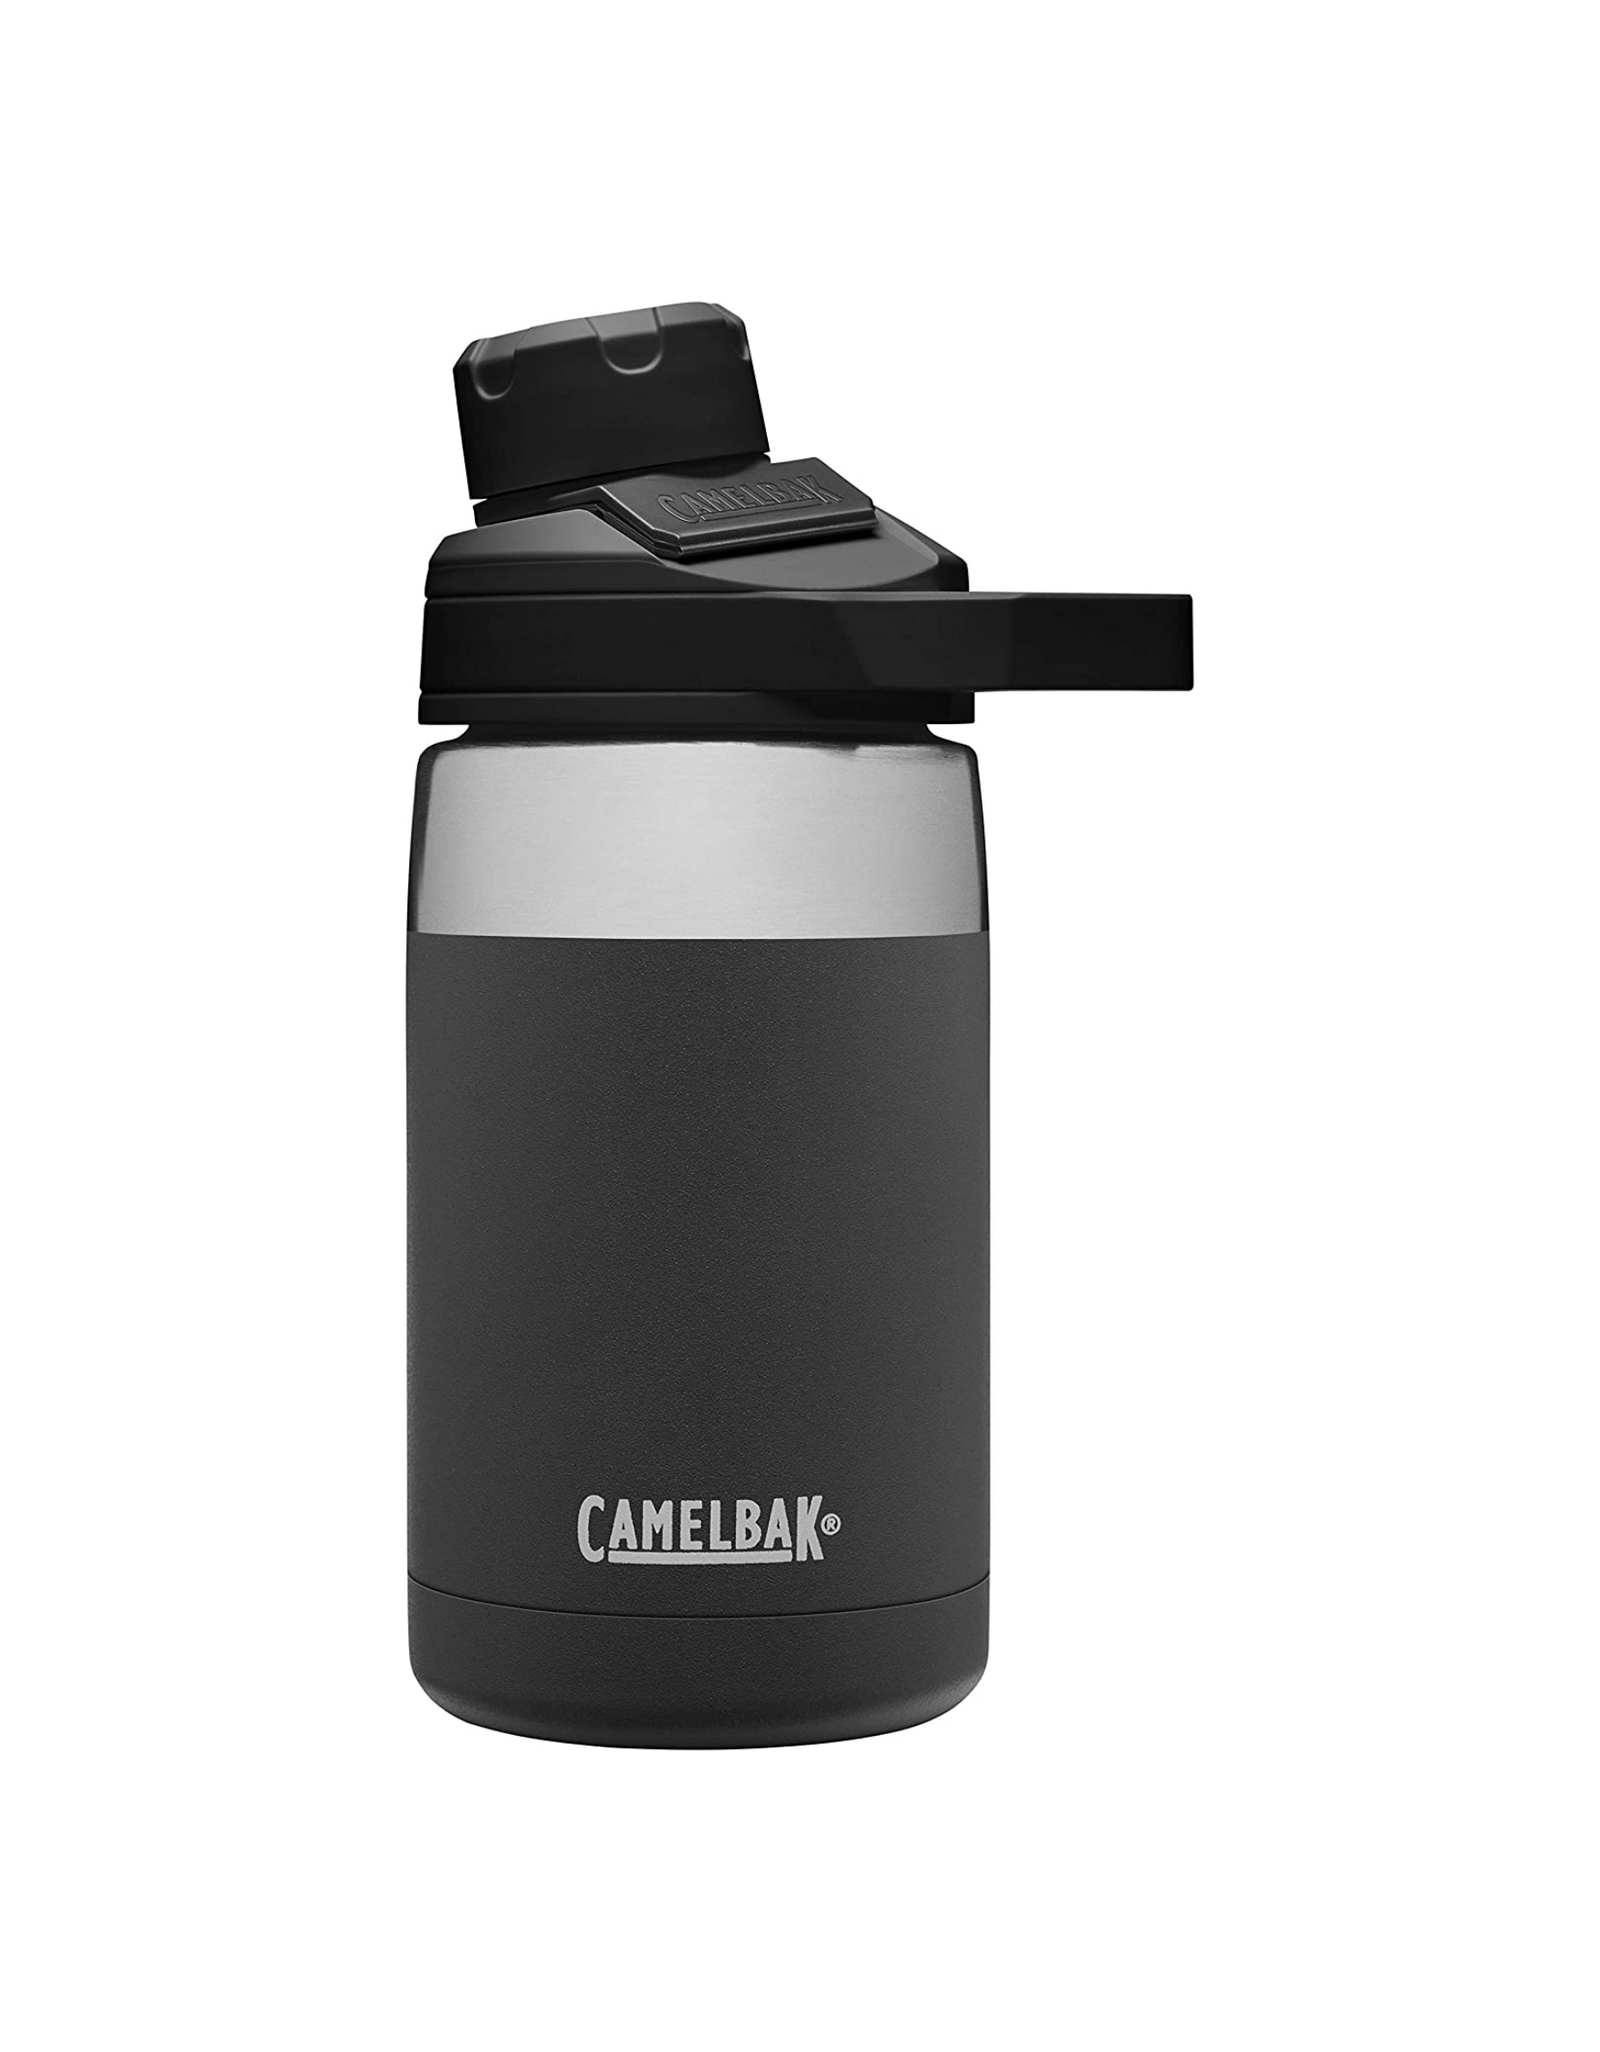 CamelBak Chute Mag Water Bottle, Insulated Stainless Steel, 12 oz, Jet